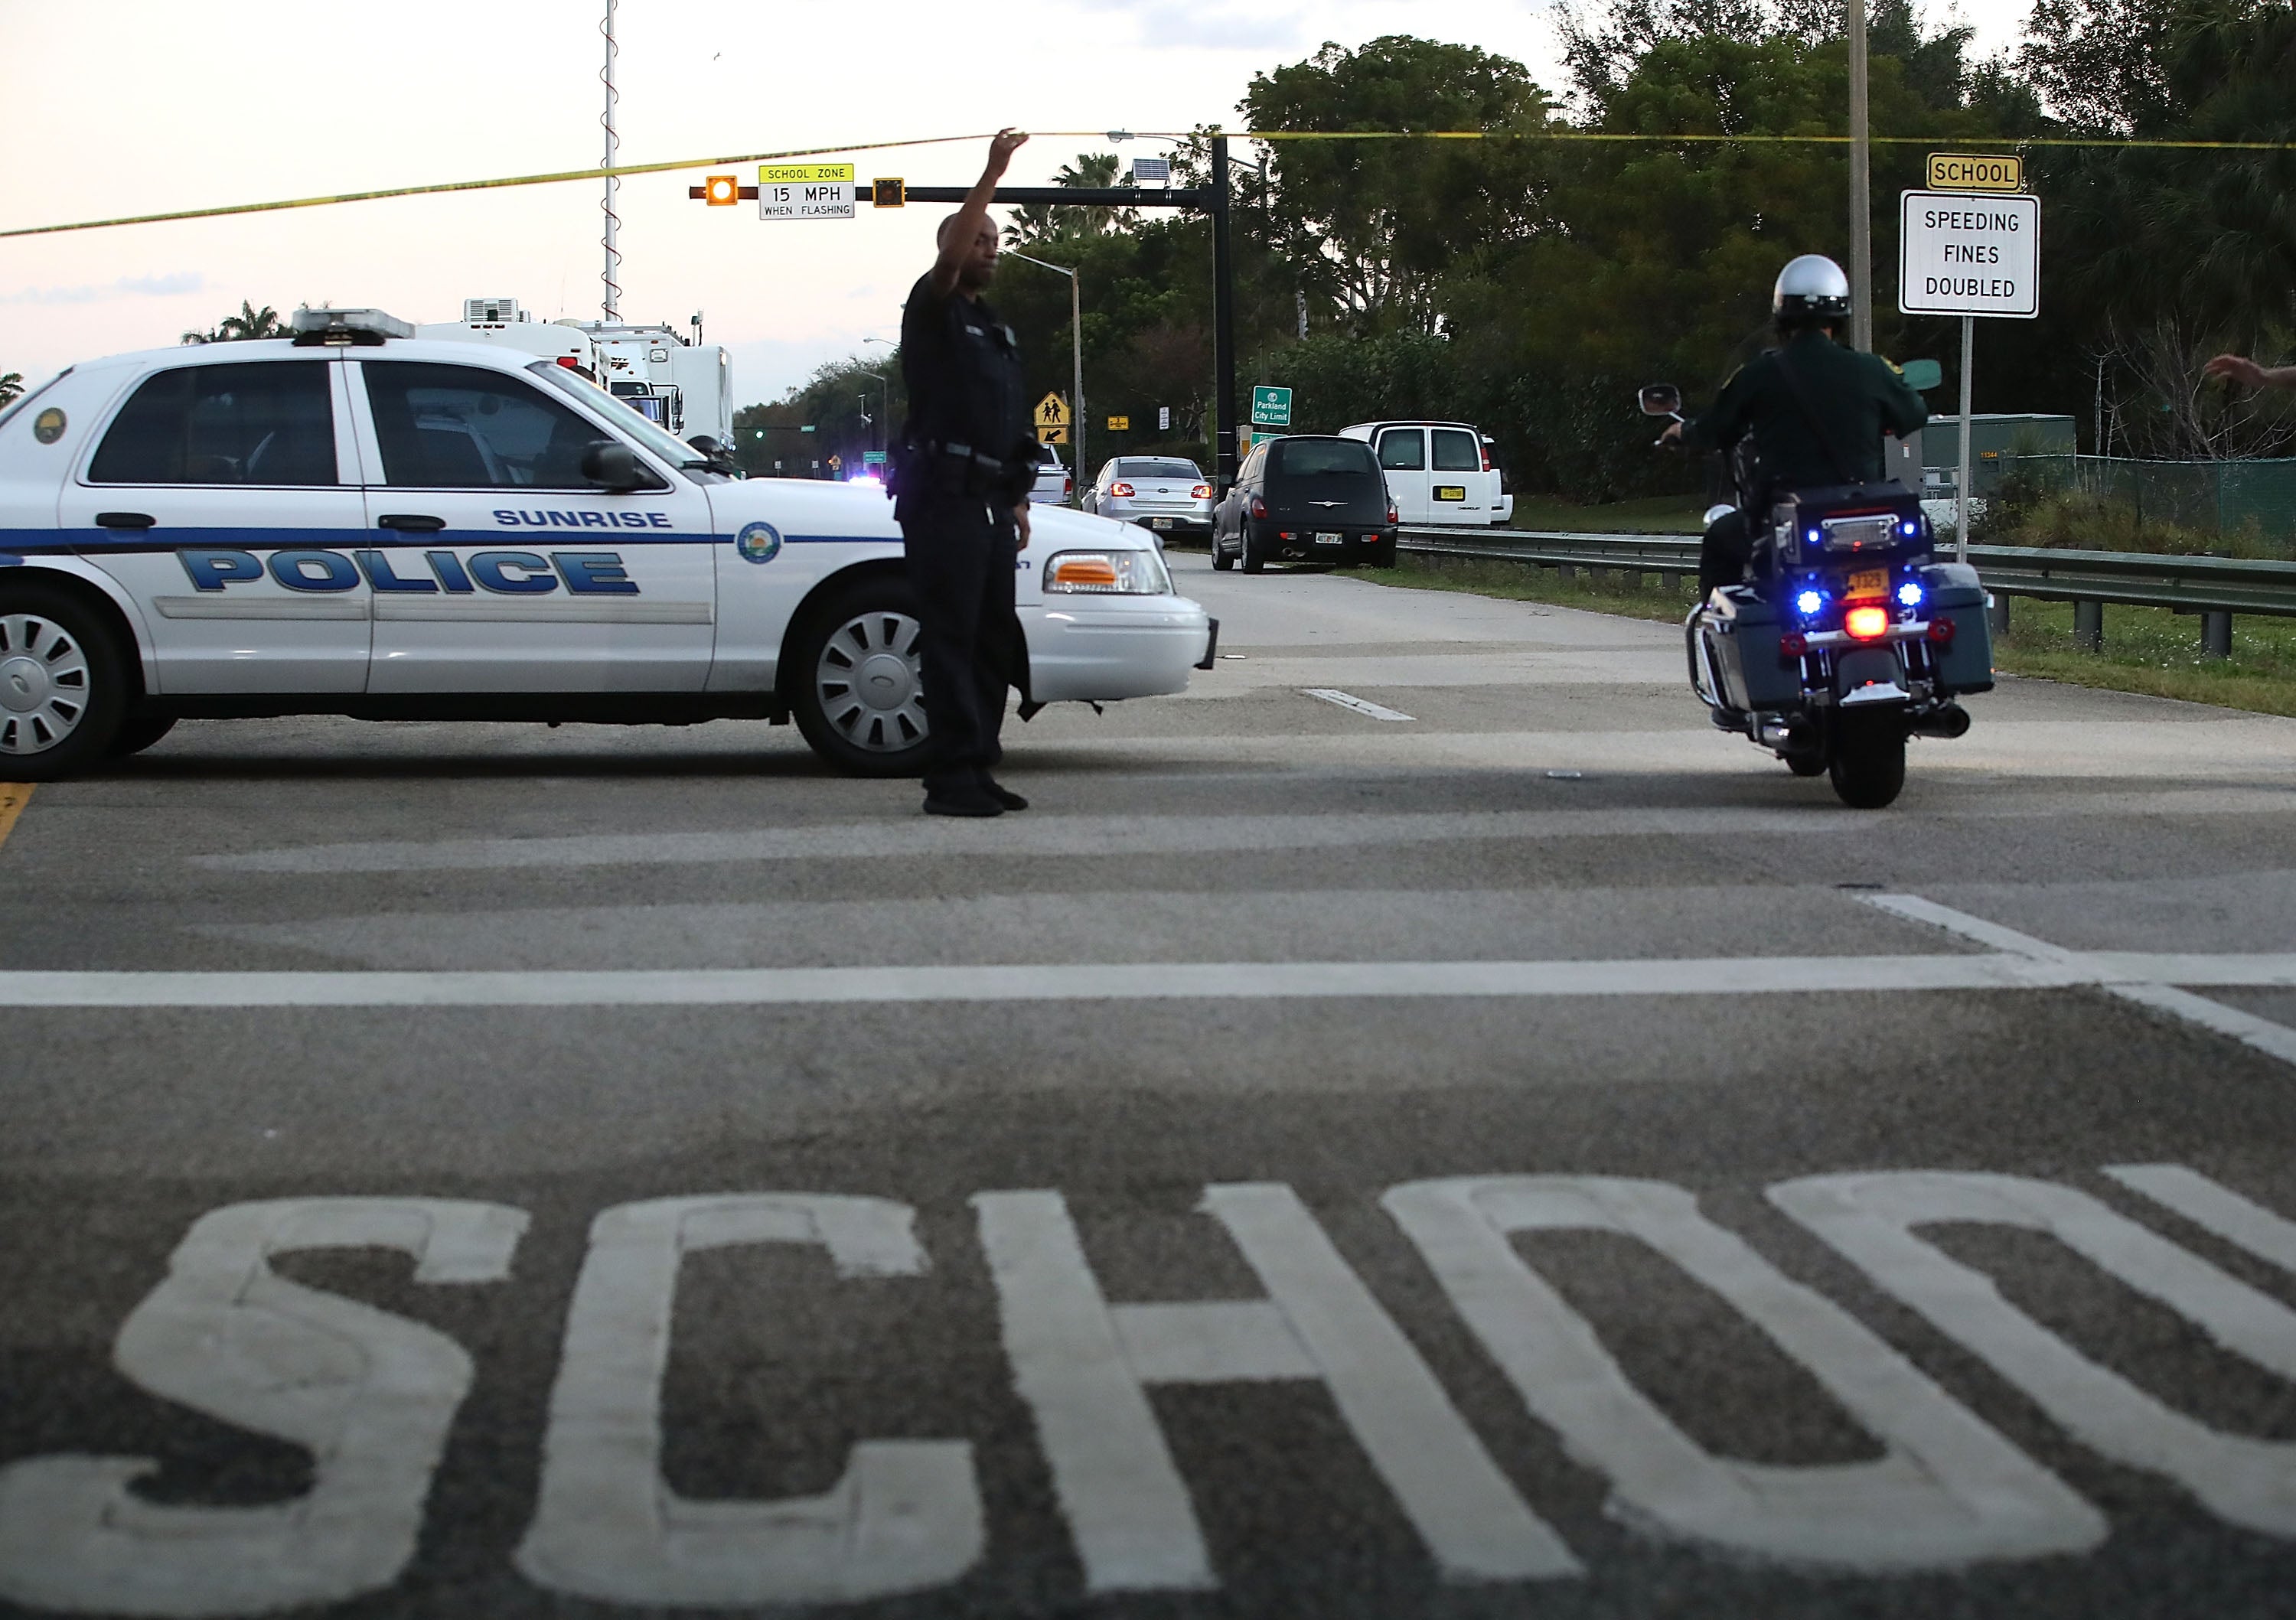 School Districts Respond To 'Copycat Threats' Following Florida School Shooting Massacre
